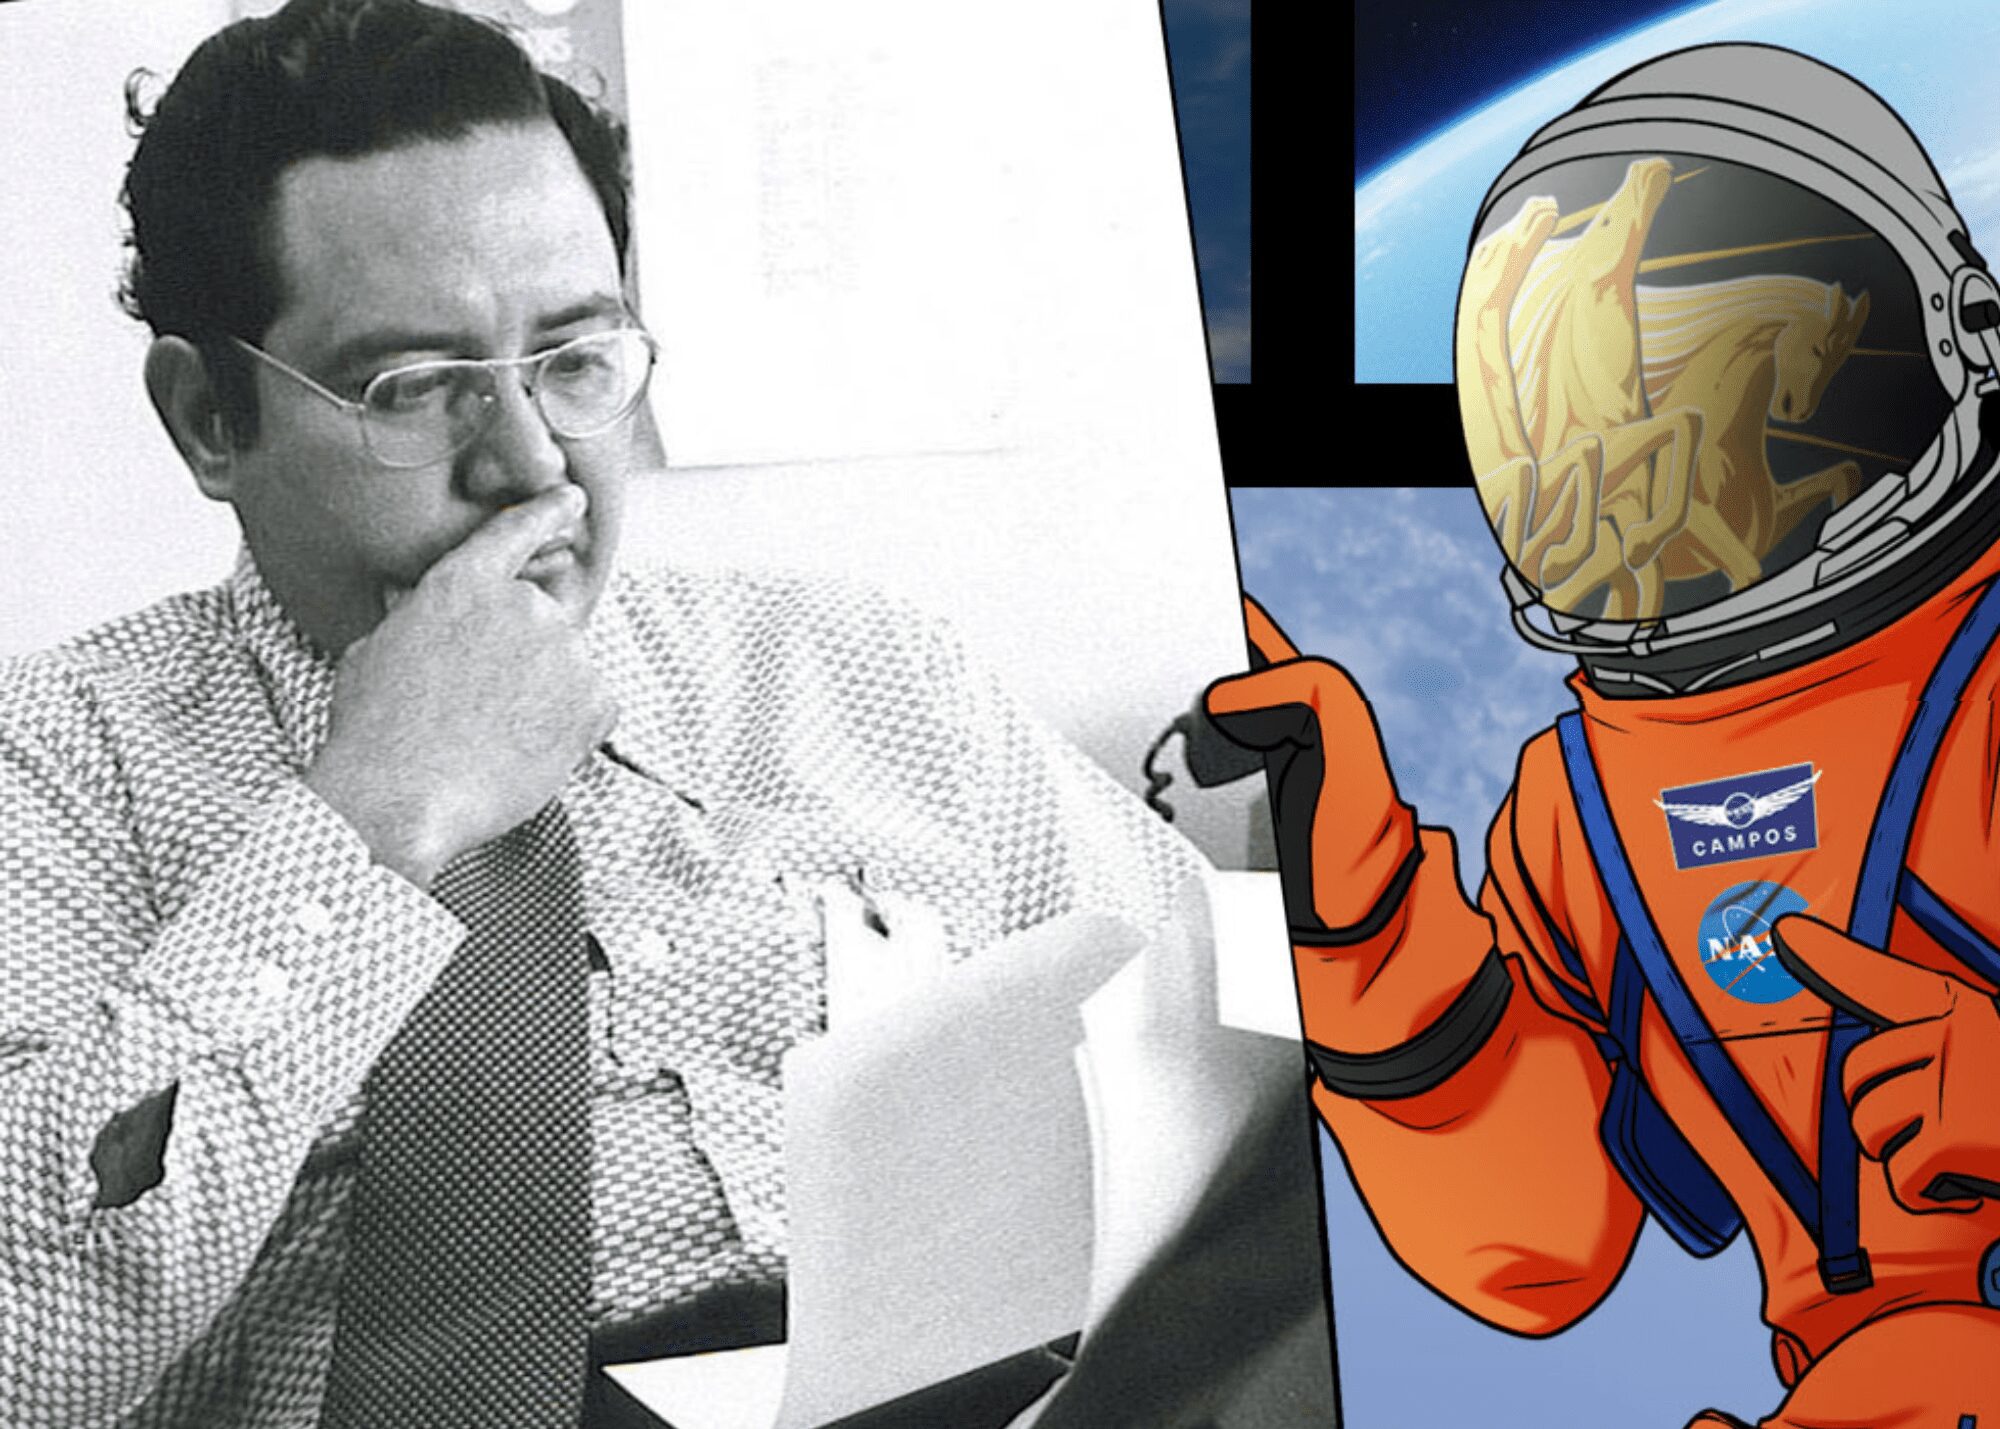 No Dummy!: NASA “Moonikin” Honors Hispanic Engineer